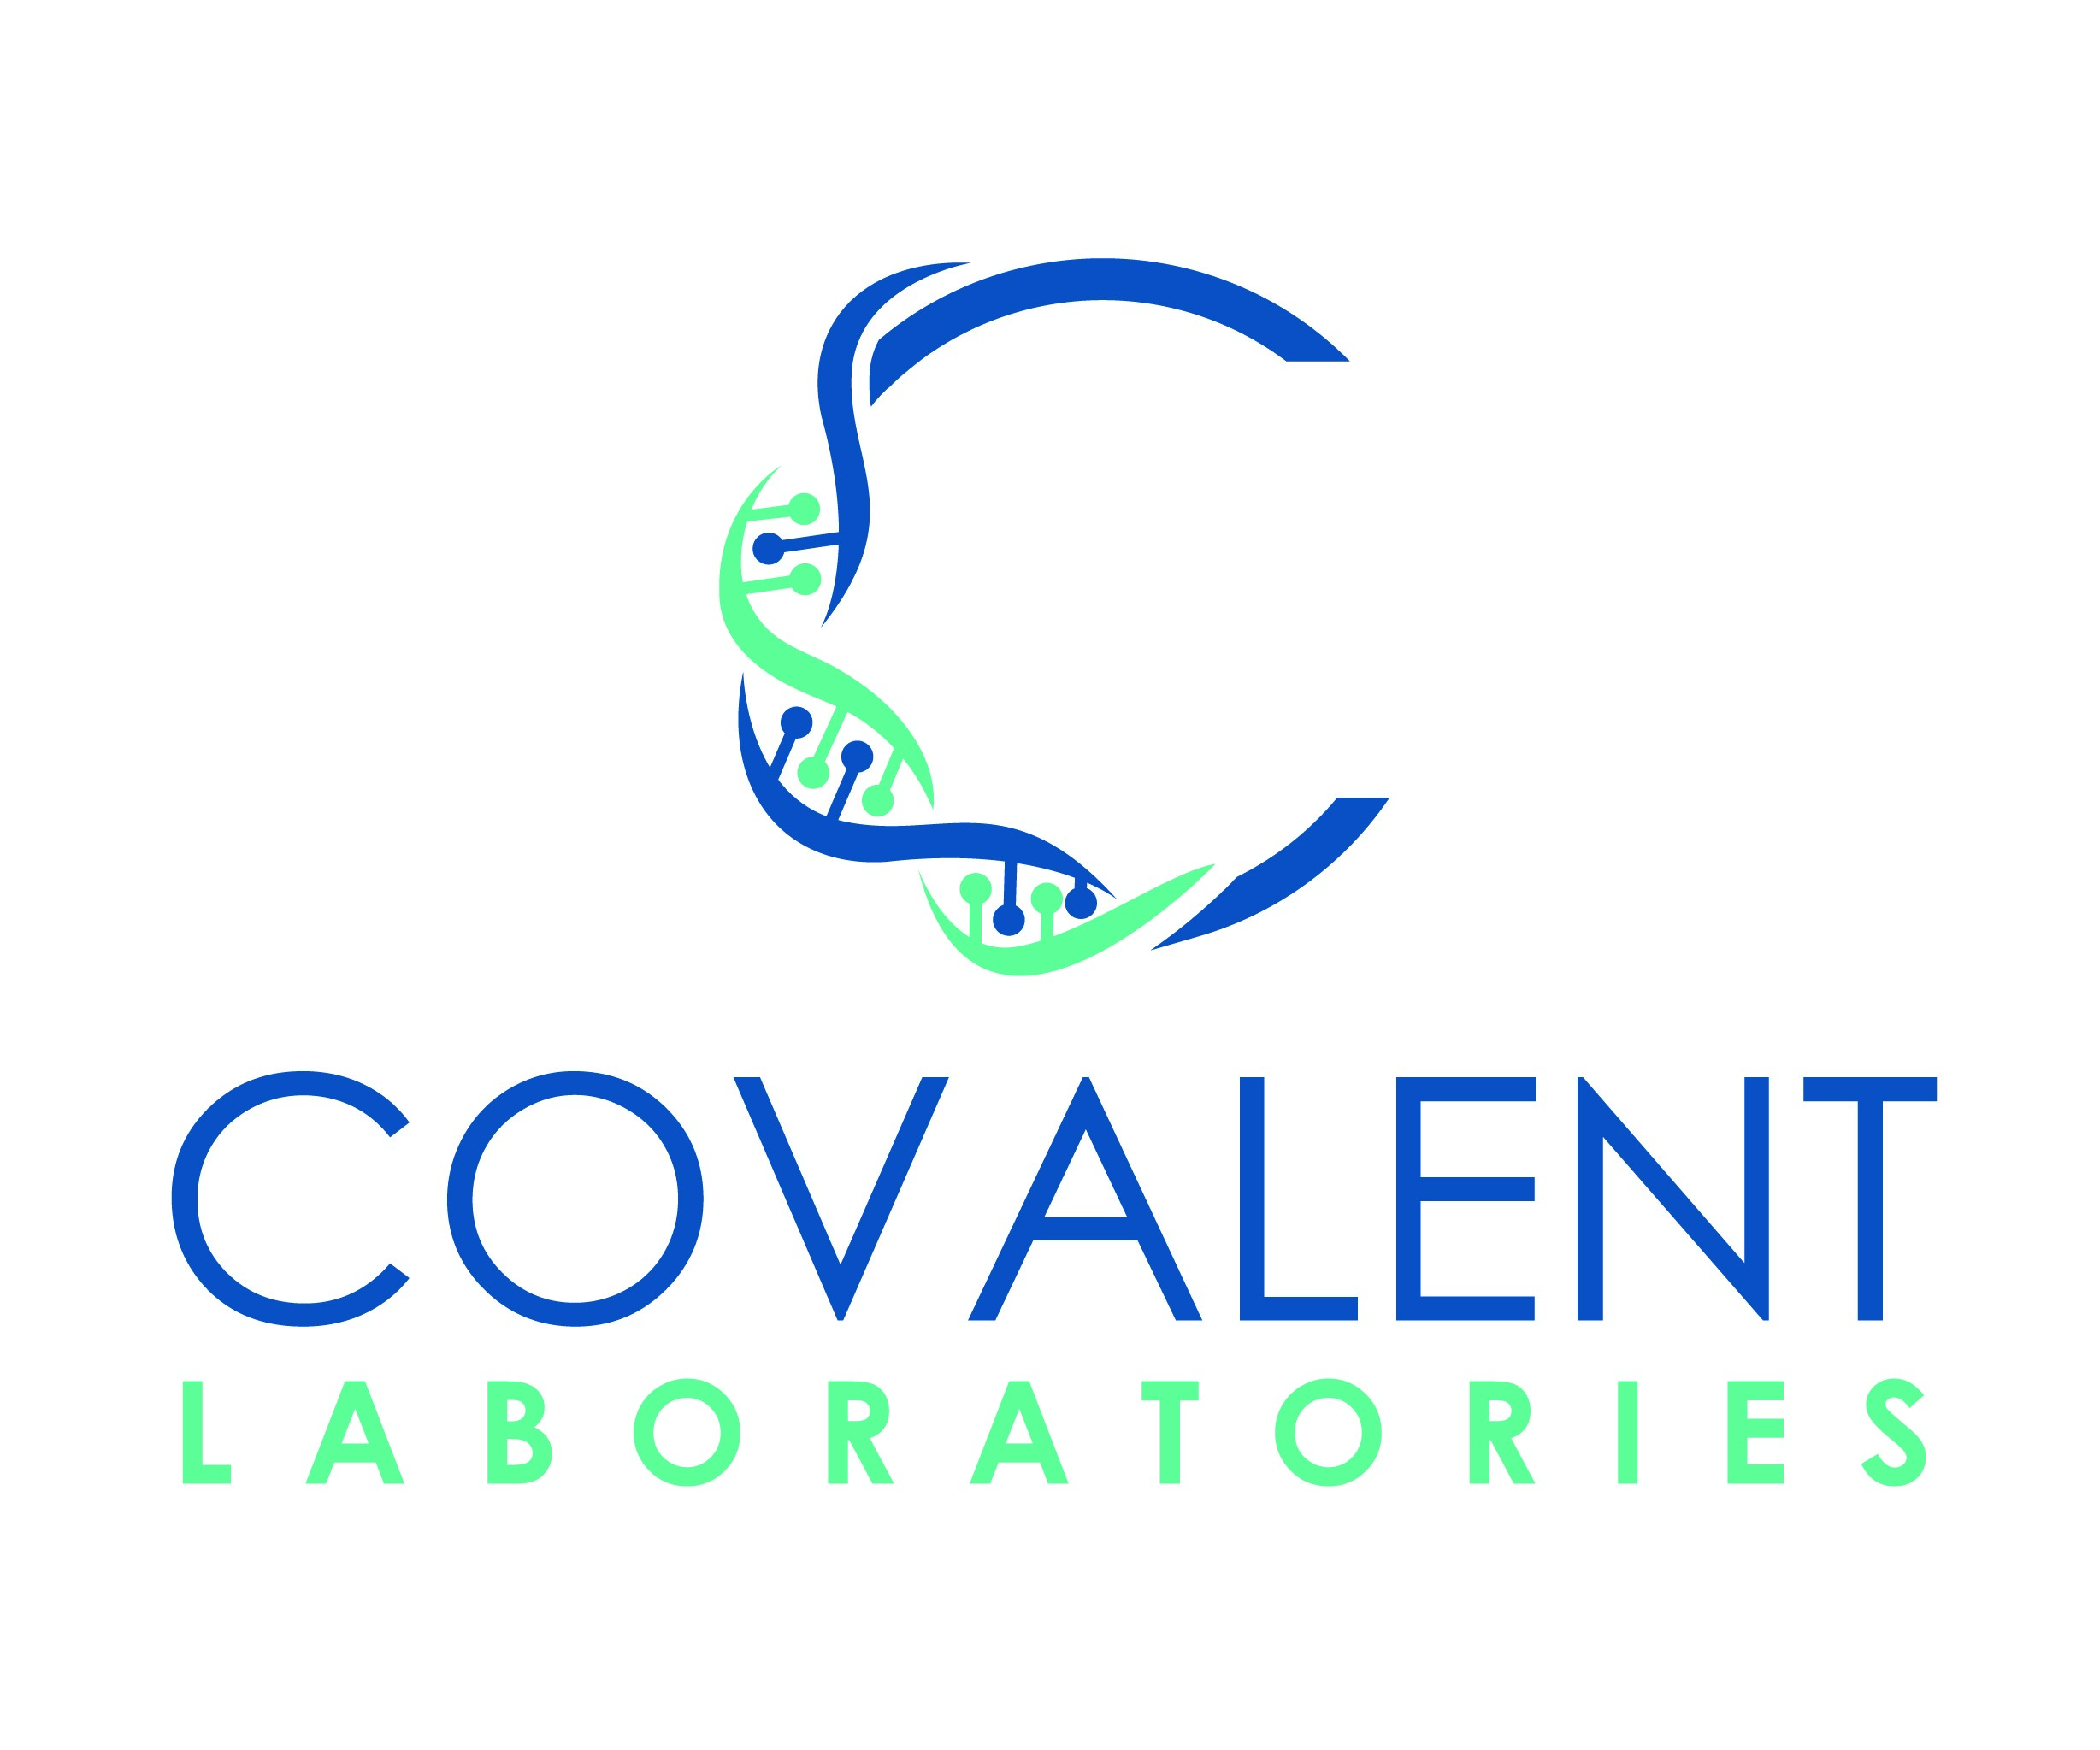 Covalent Laboratories logo